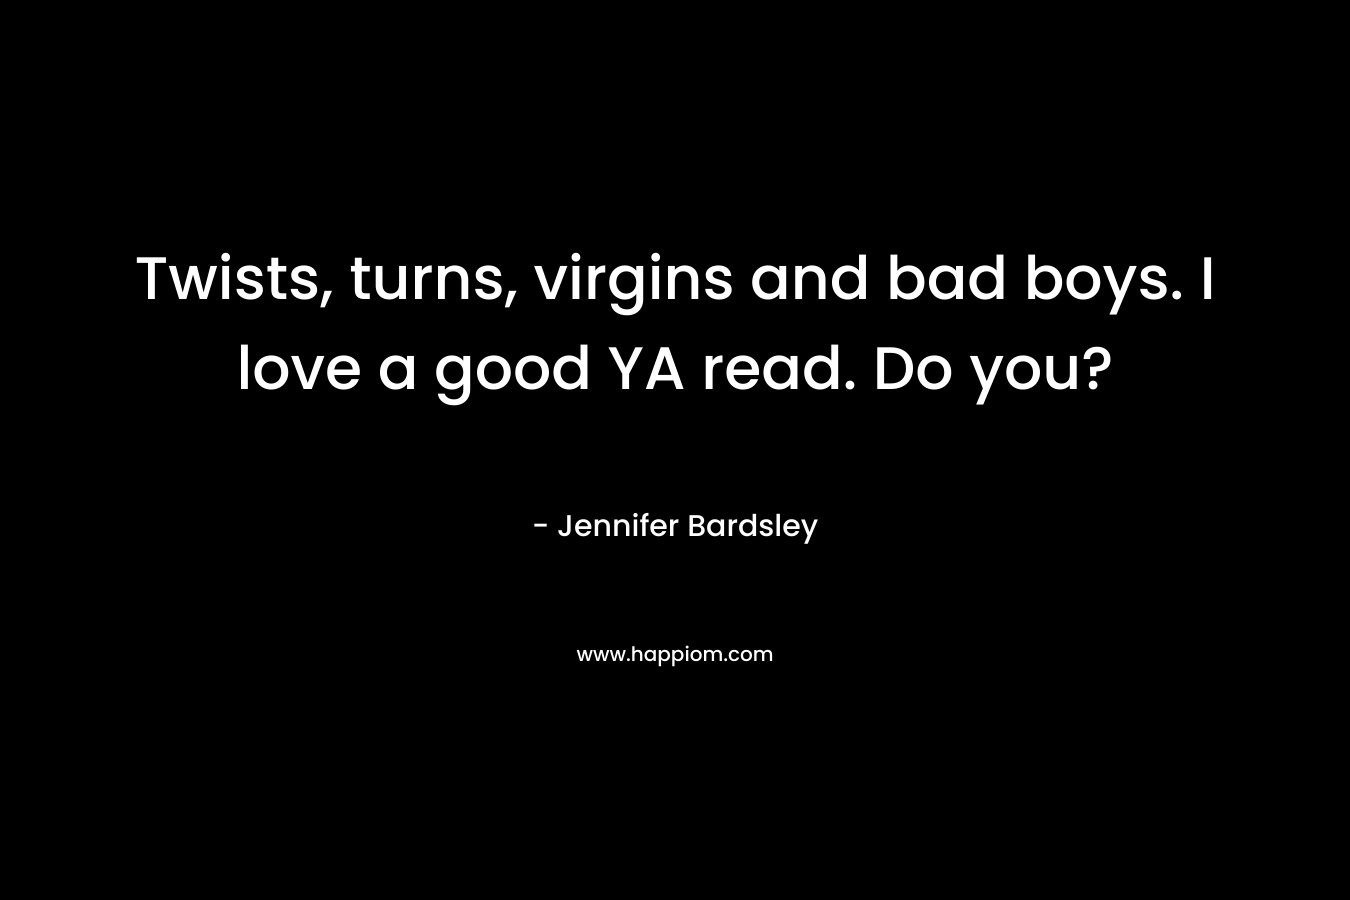 Twists, turns, virgins and bad boys. I love a good YA read. Do you?